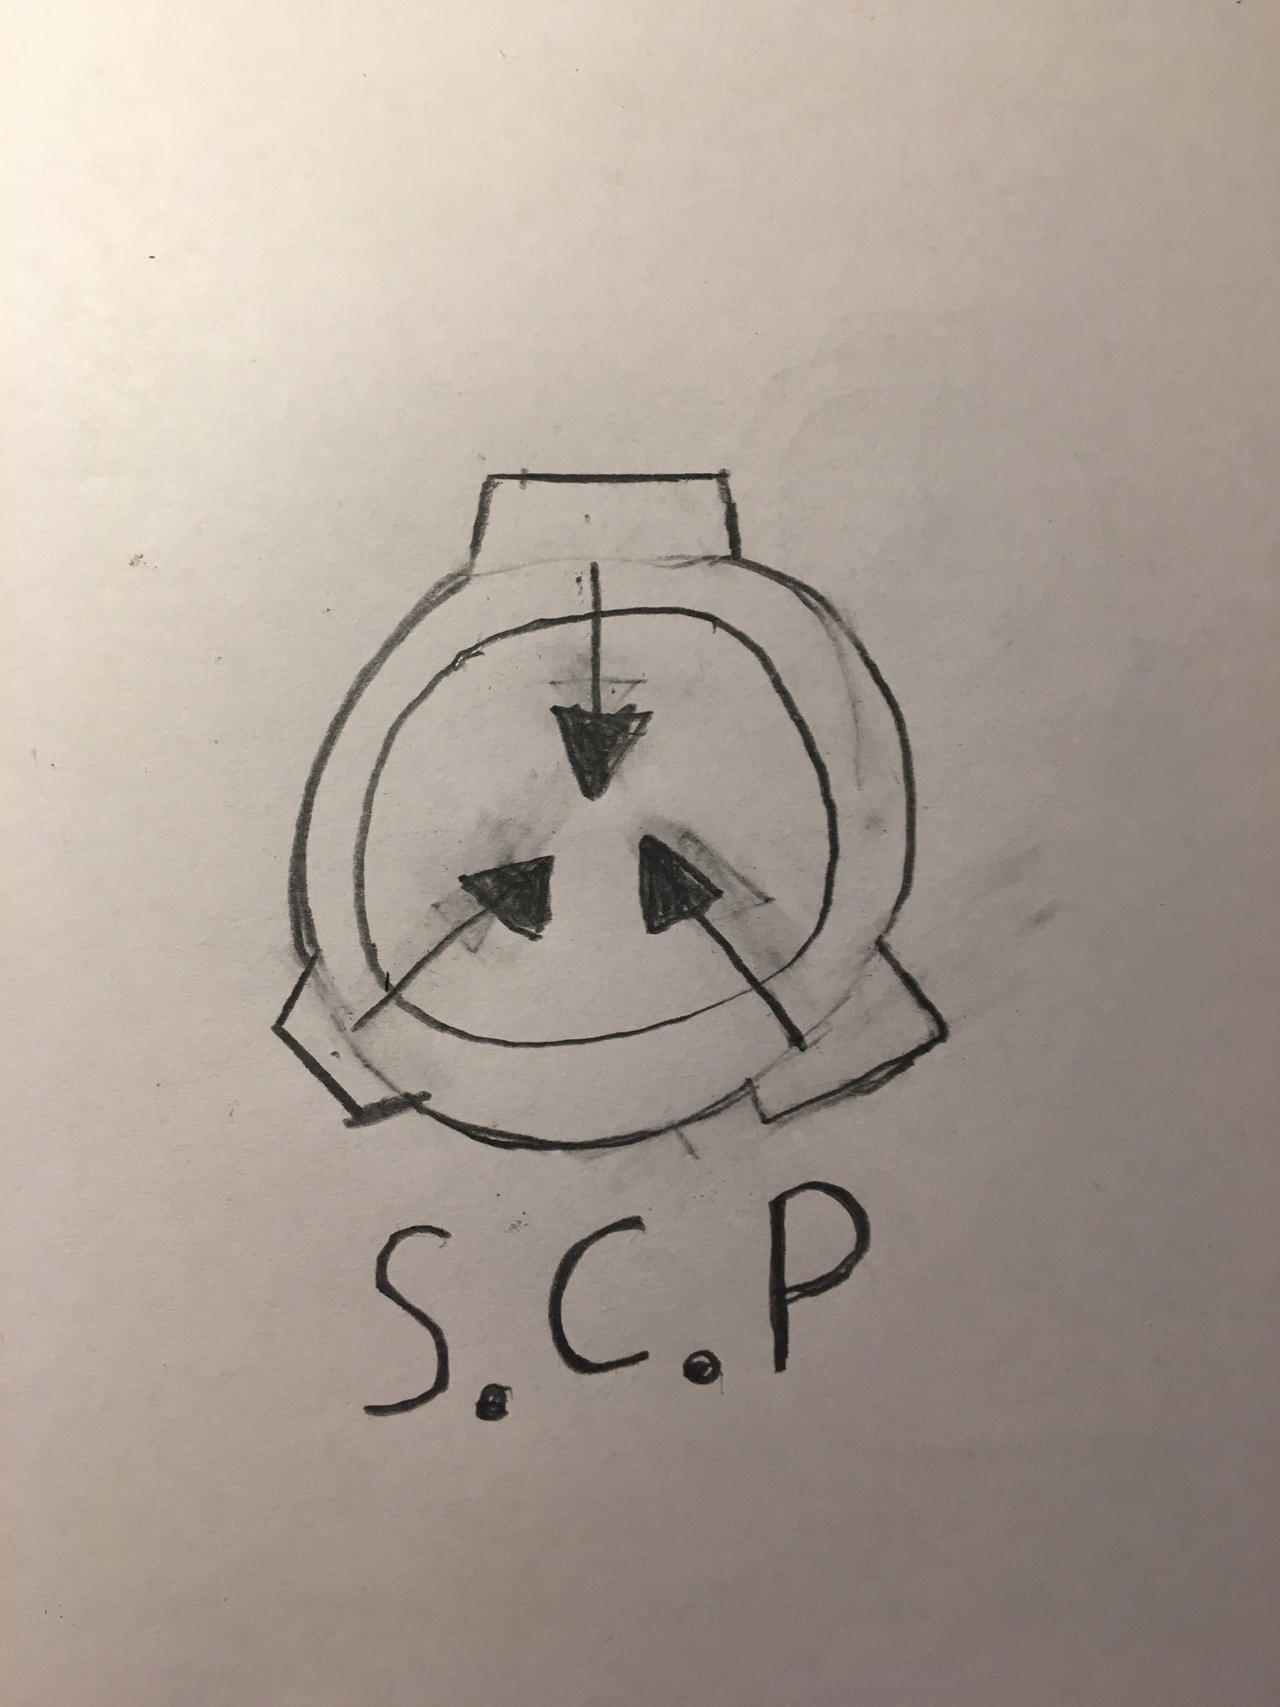 Scp foundation logo - Wallpaper by Kurstruss on DeviantArt